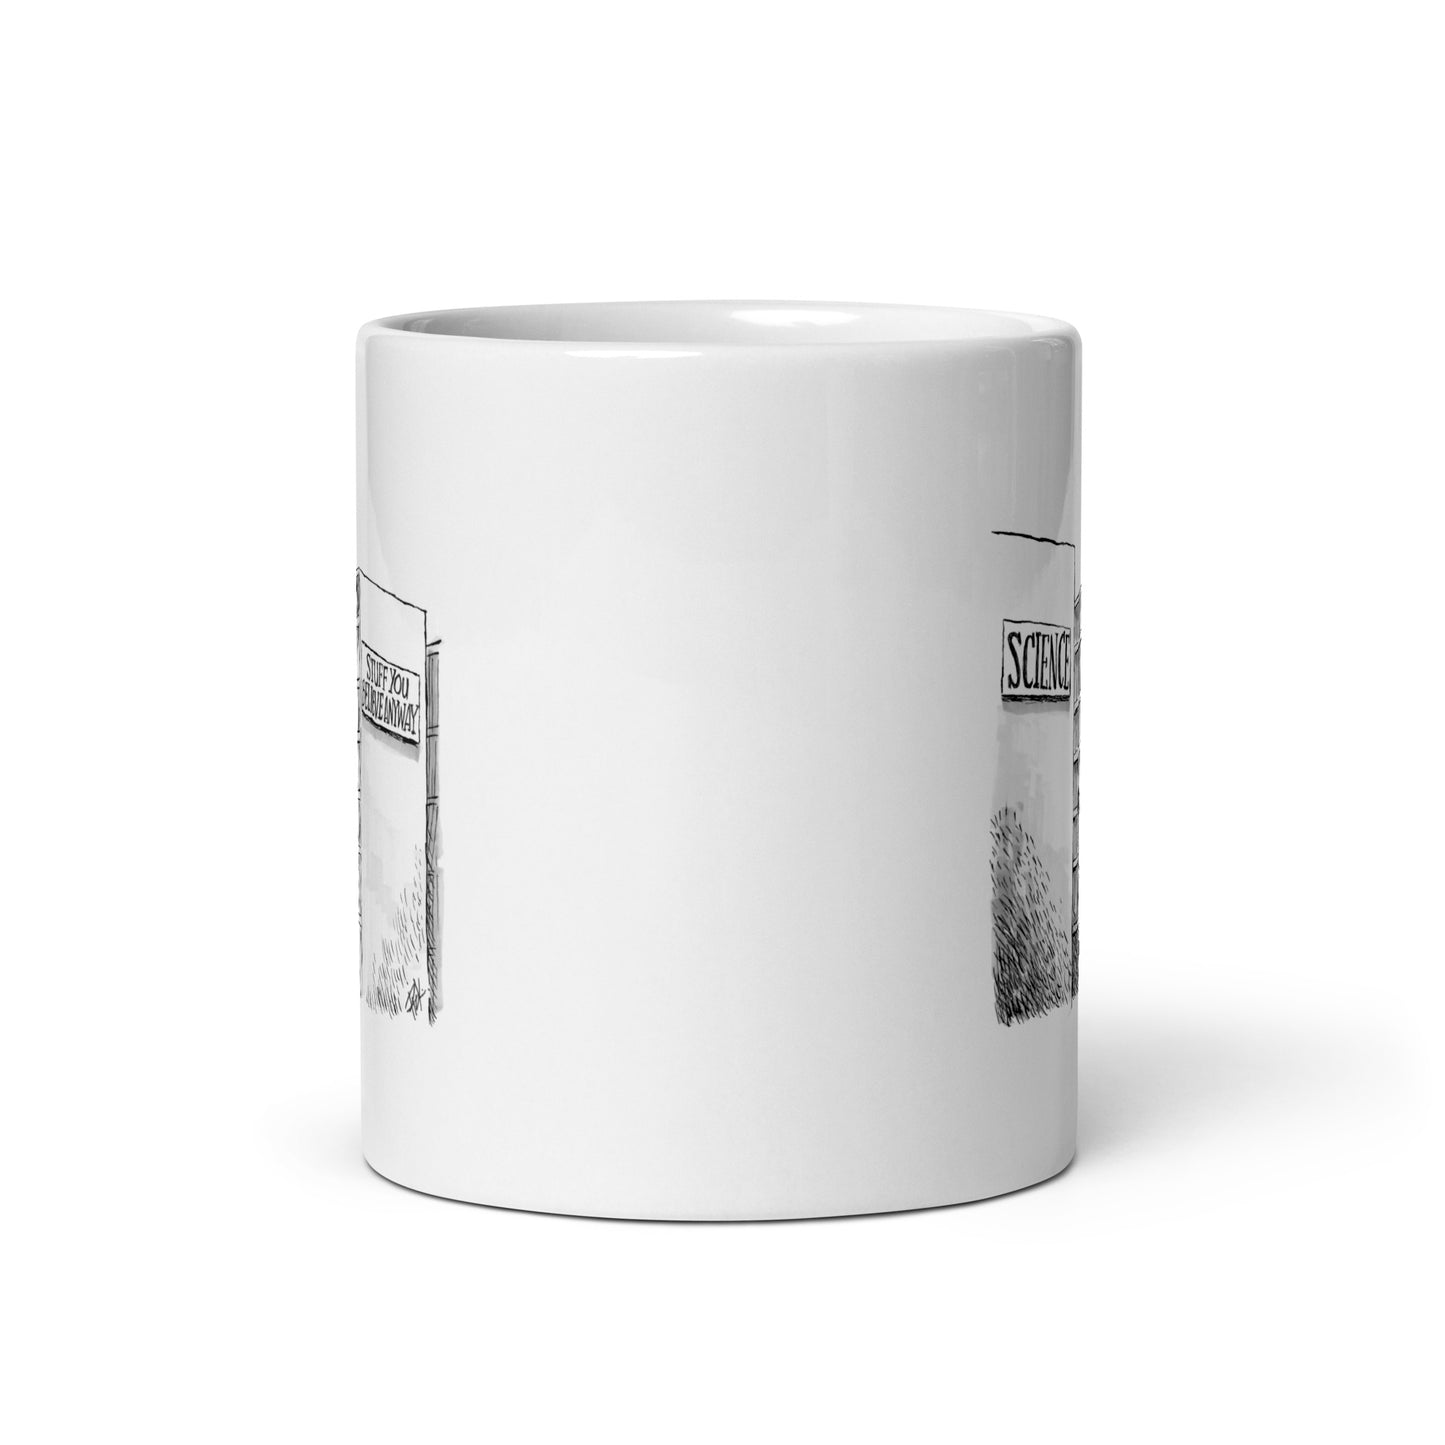 Science - White Glossy Mug